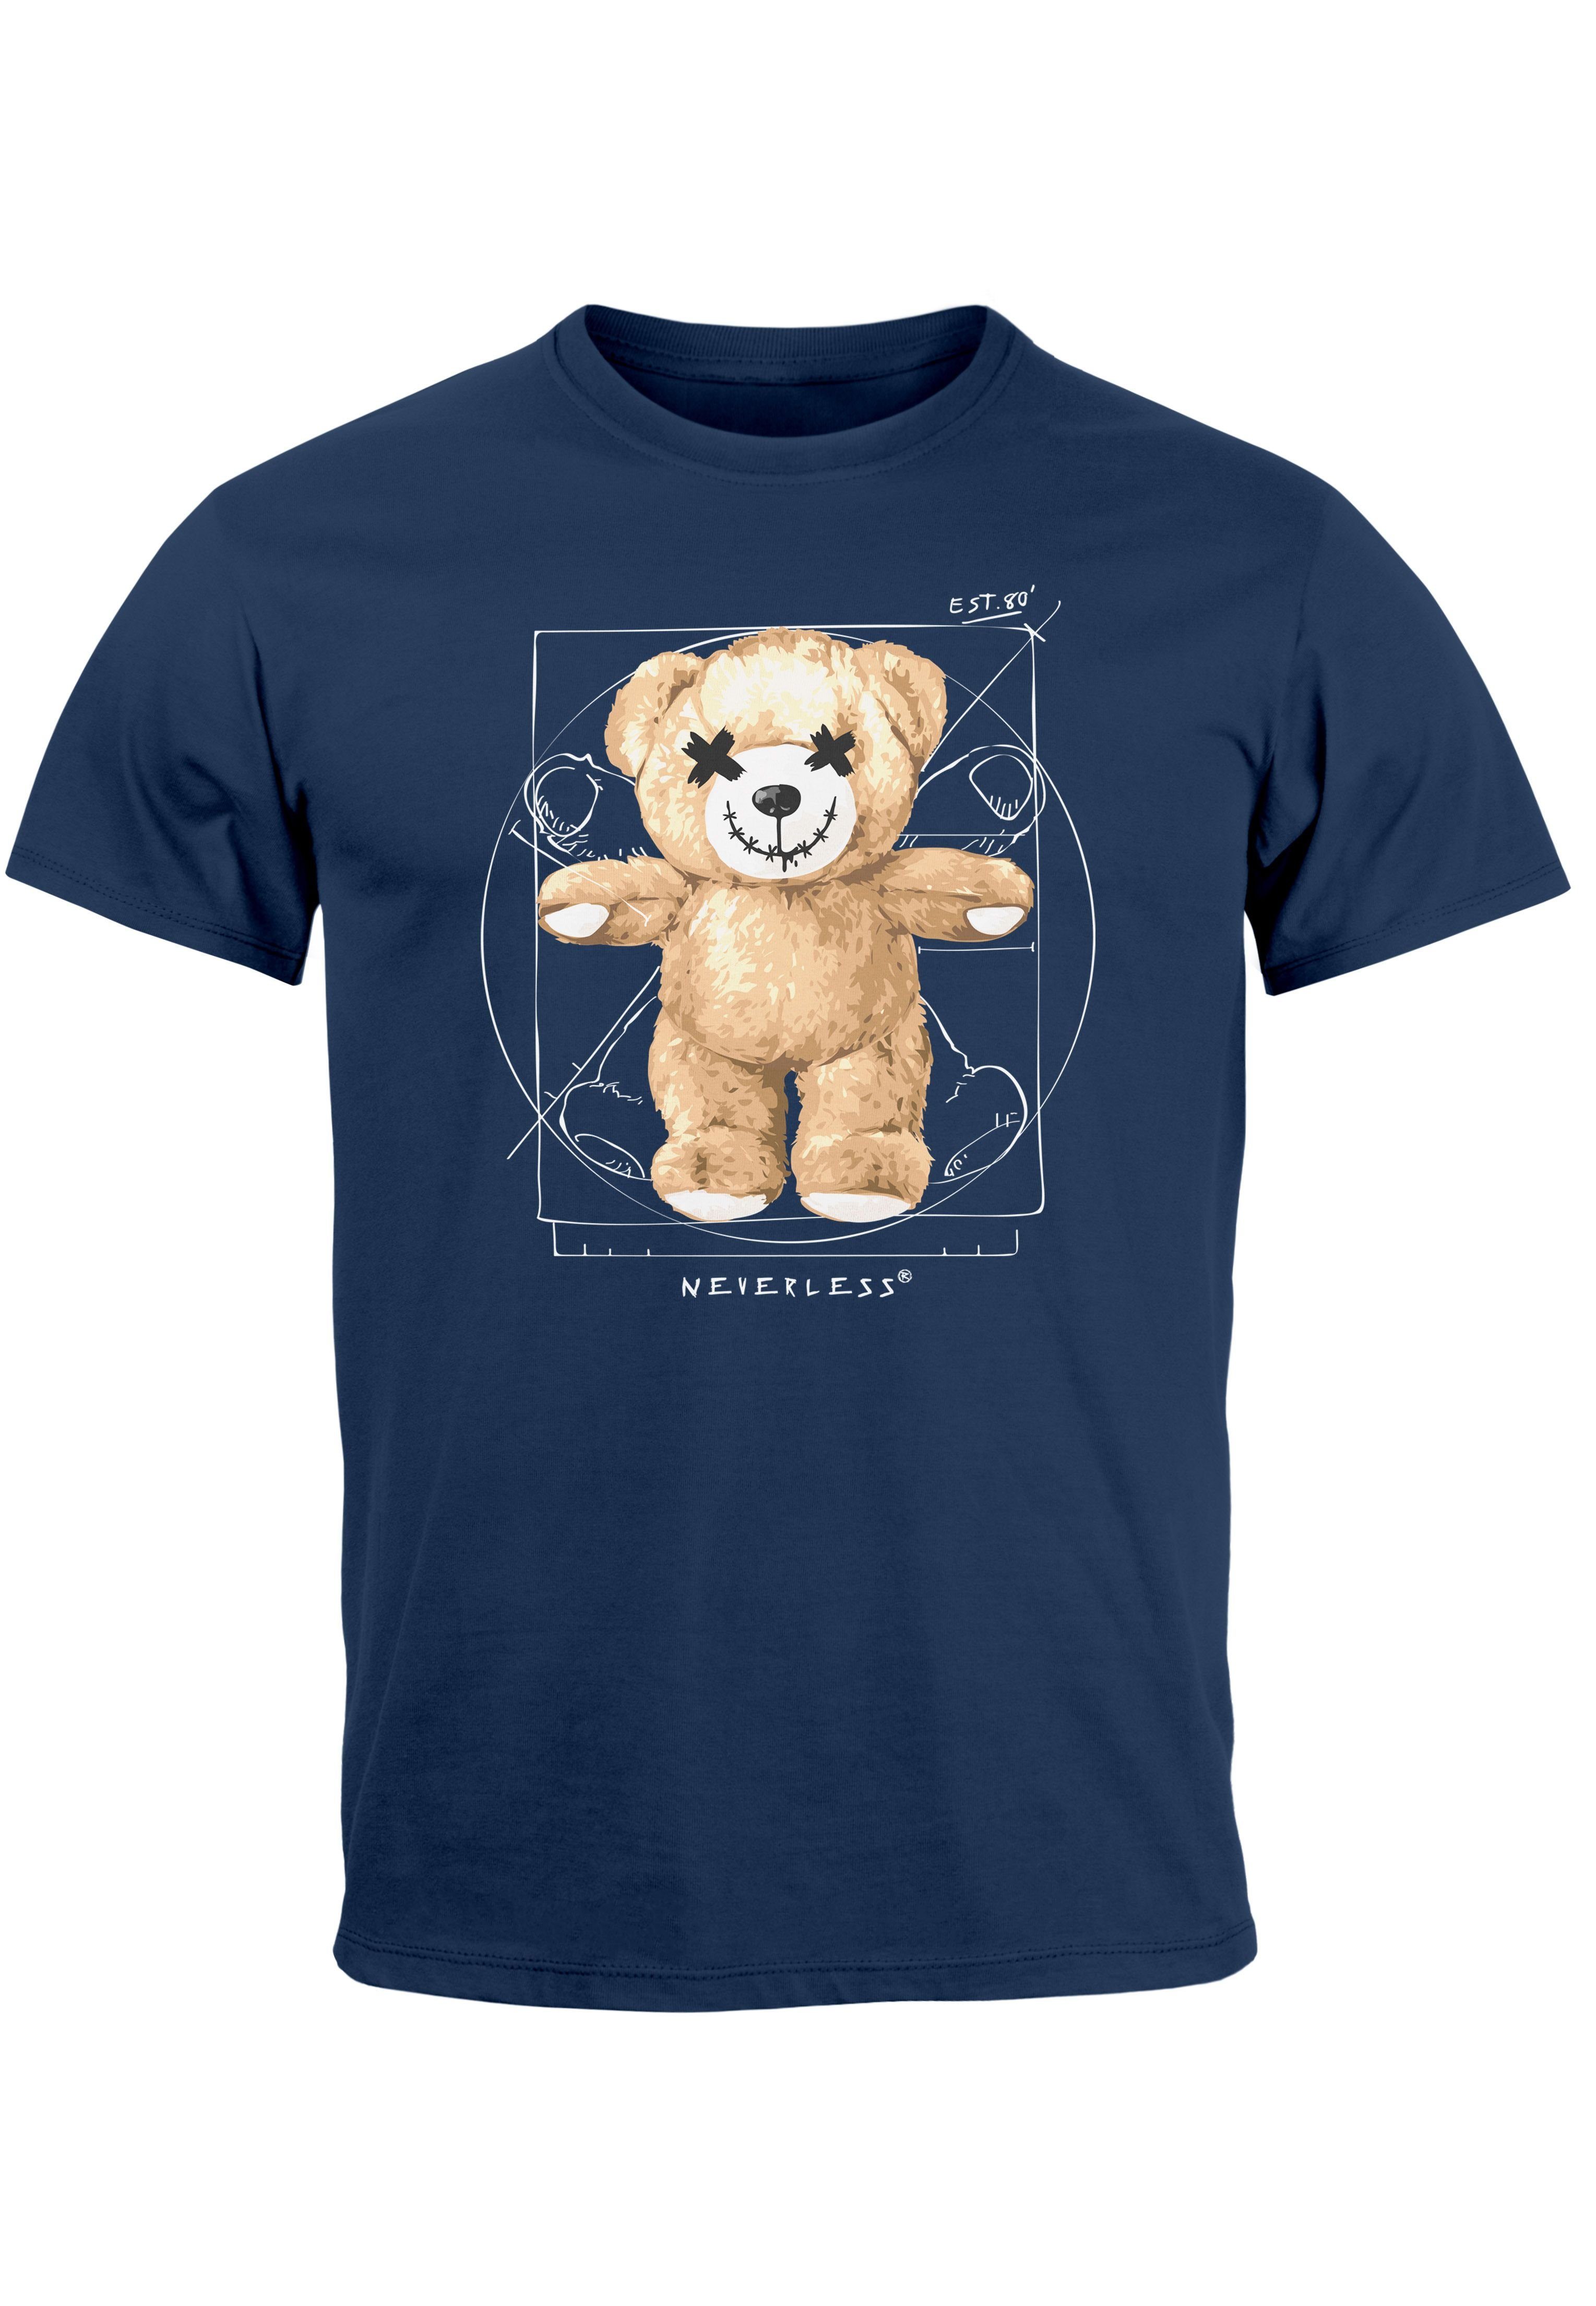 Neverless Print-Shirt Herren T-Shirt Print Teddy Bär DaVinci Meme Parodie Fashion Streetstyl mit Print navy